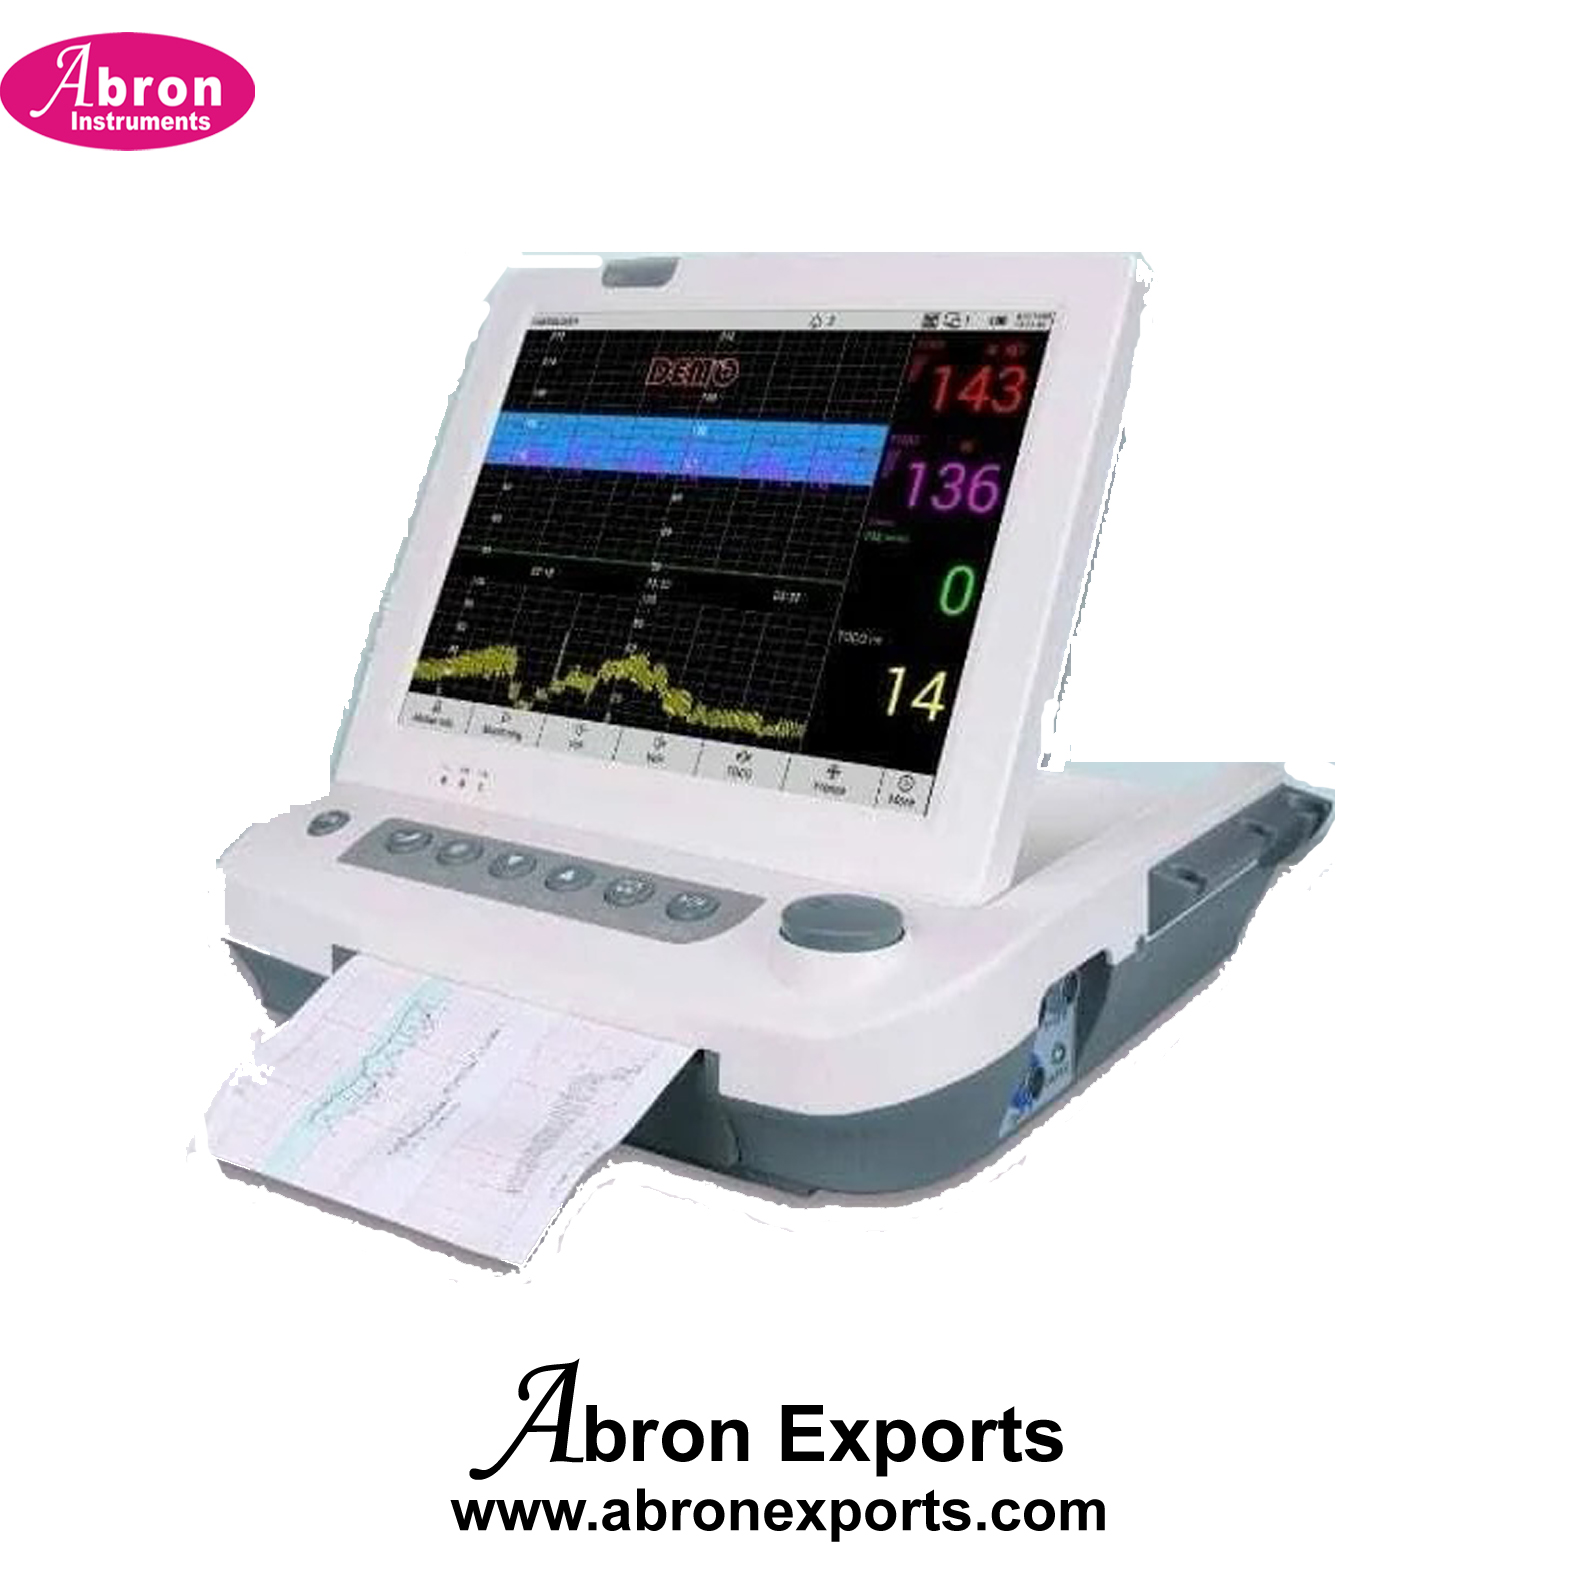 CTG Machine wireless fetal Monitor High End anesthesia workstation Hospital Cardiotocography printer Abron ABM-2280CT1 